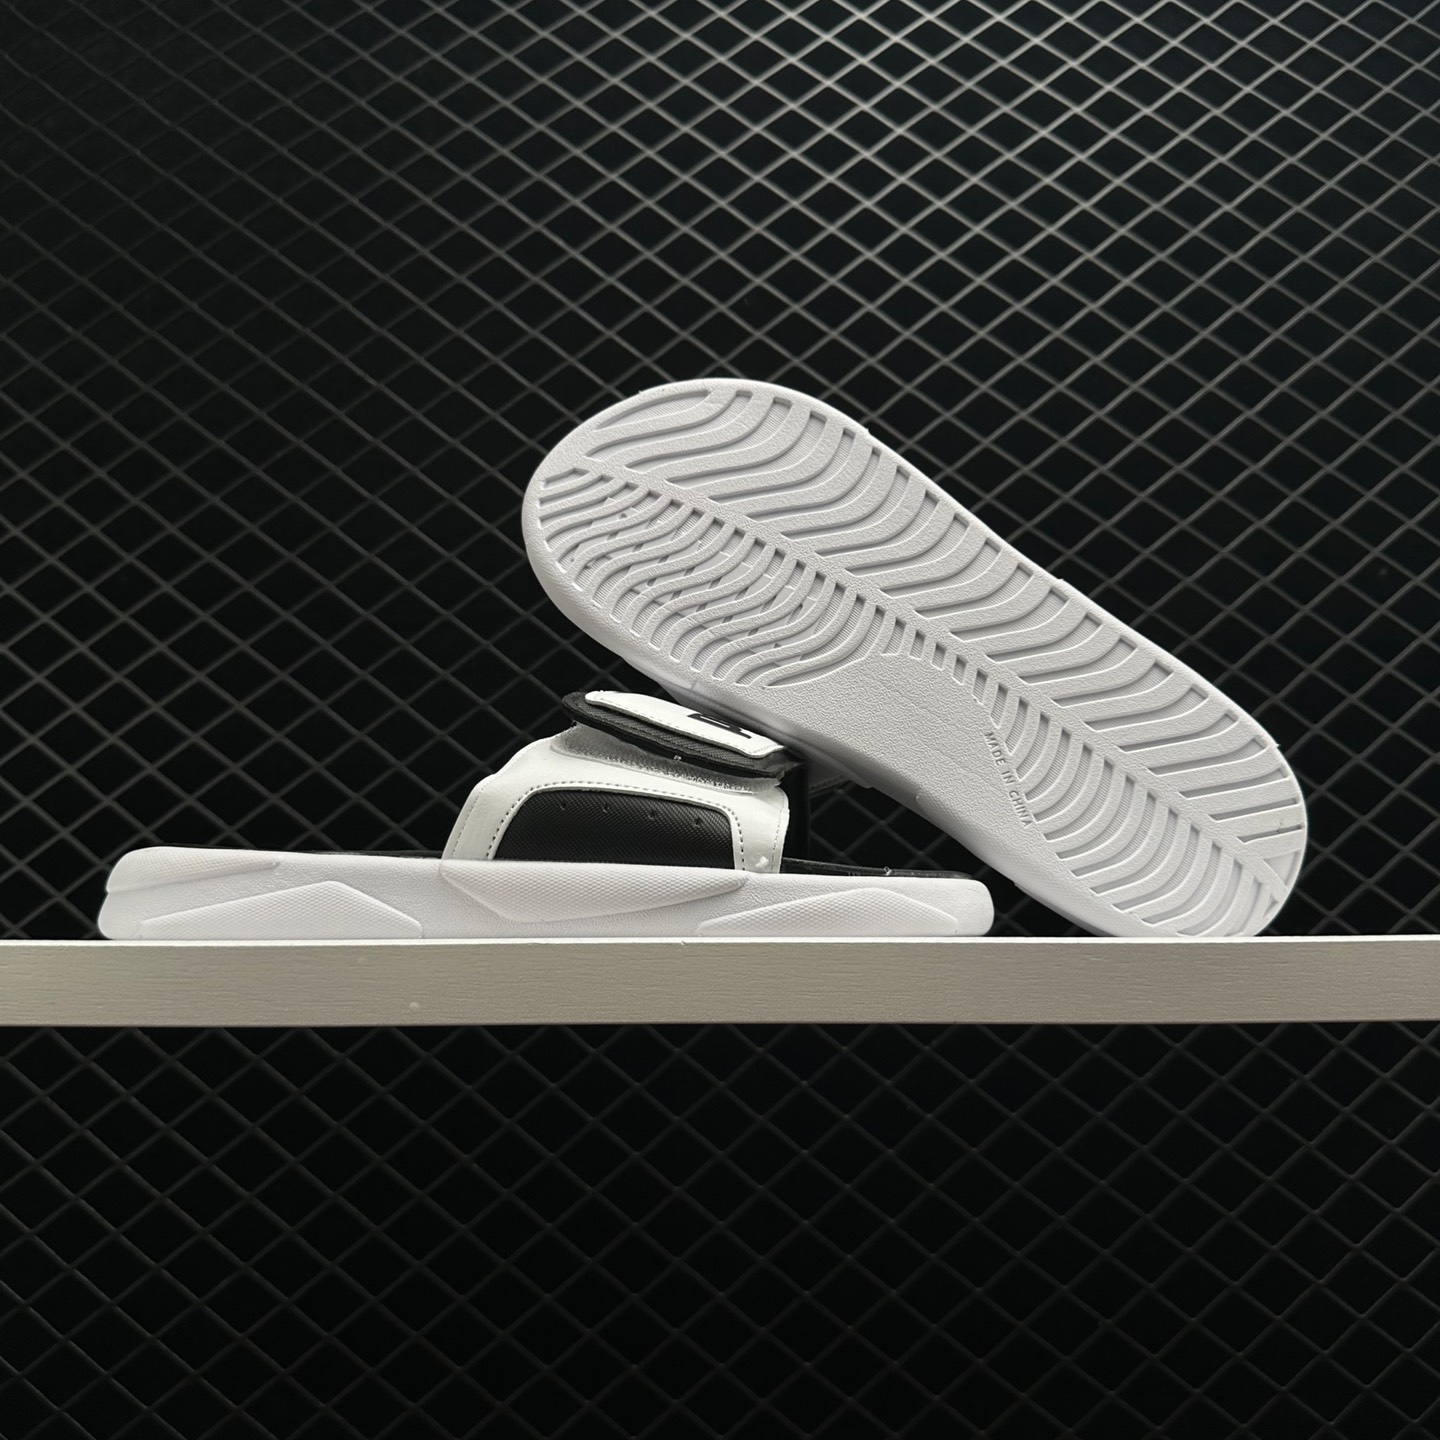 PUMA Royalcat Comfort Sandal 'White' 372280-02 - Stylish and Comfortable Footwear